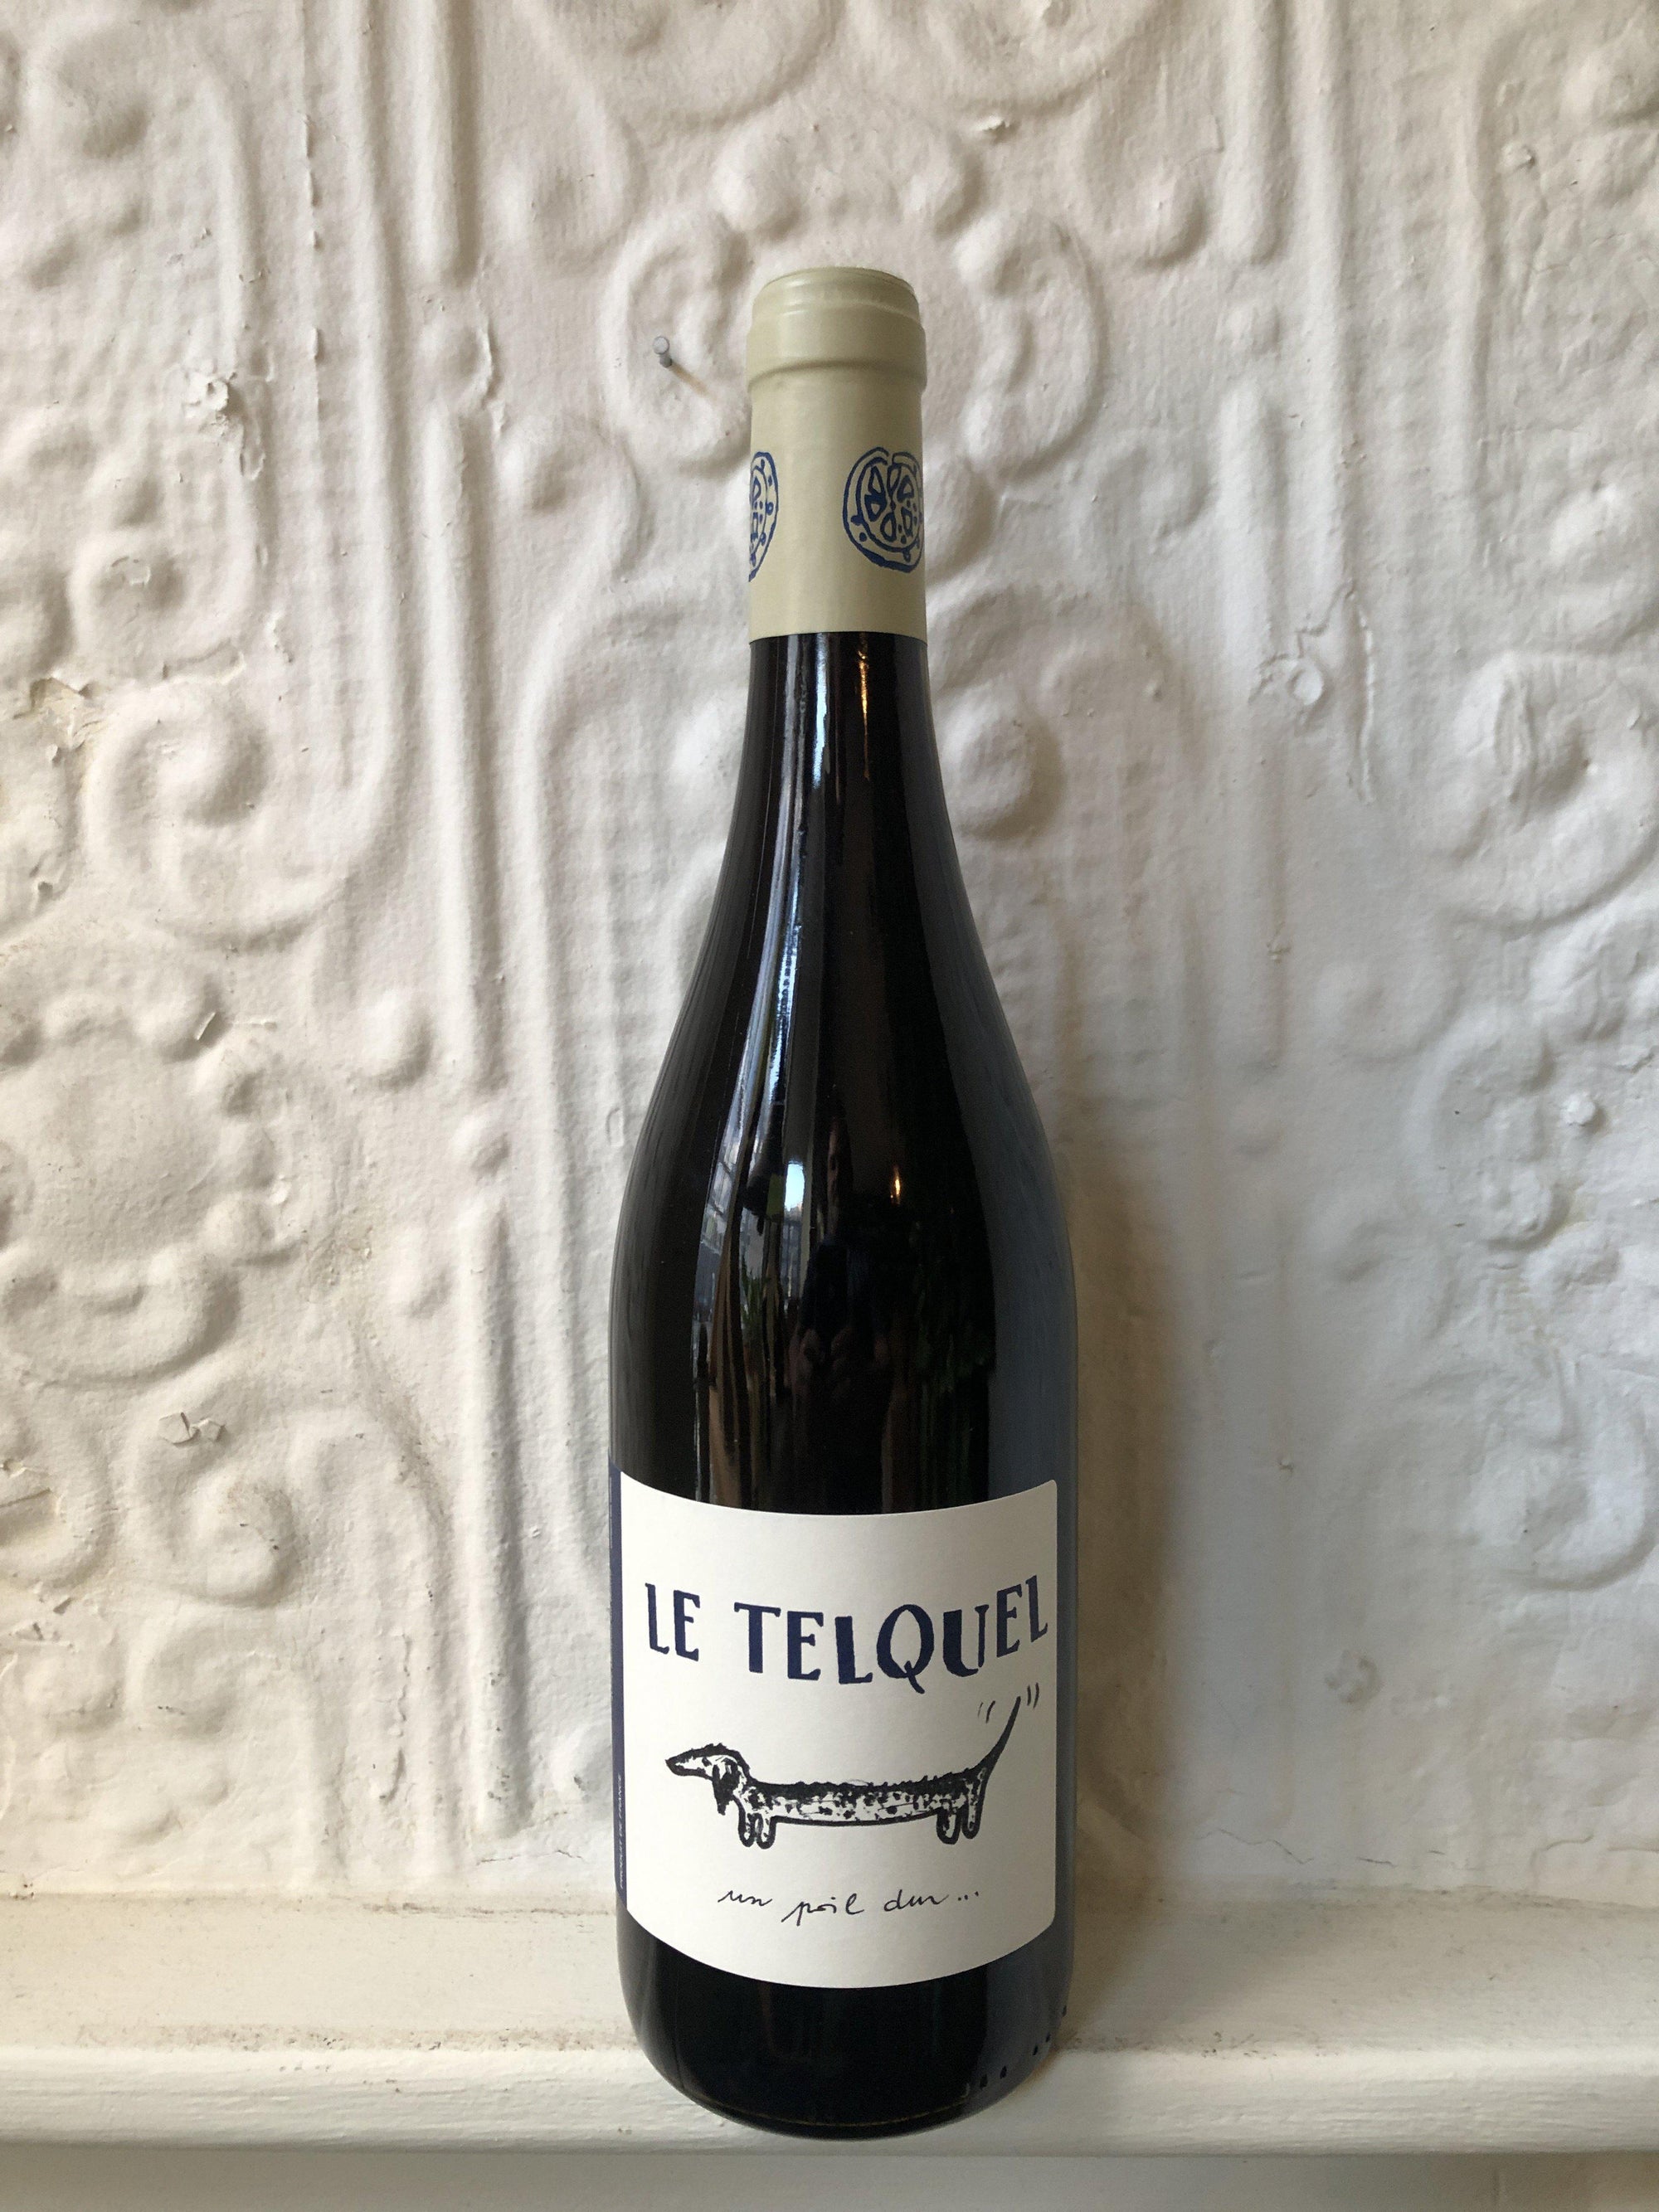 Le Telquel, Pierre-Olivier Bonhomme 2019 (Loire, France)-Wine-Bibber & Bell